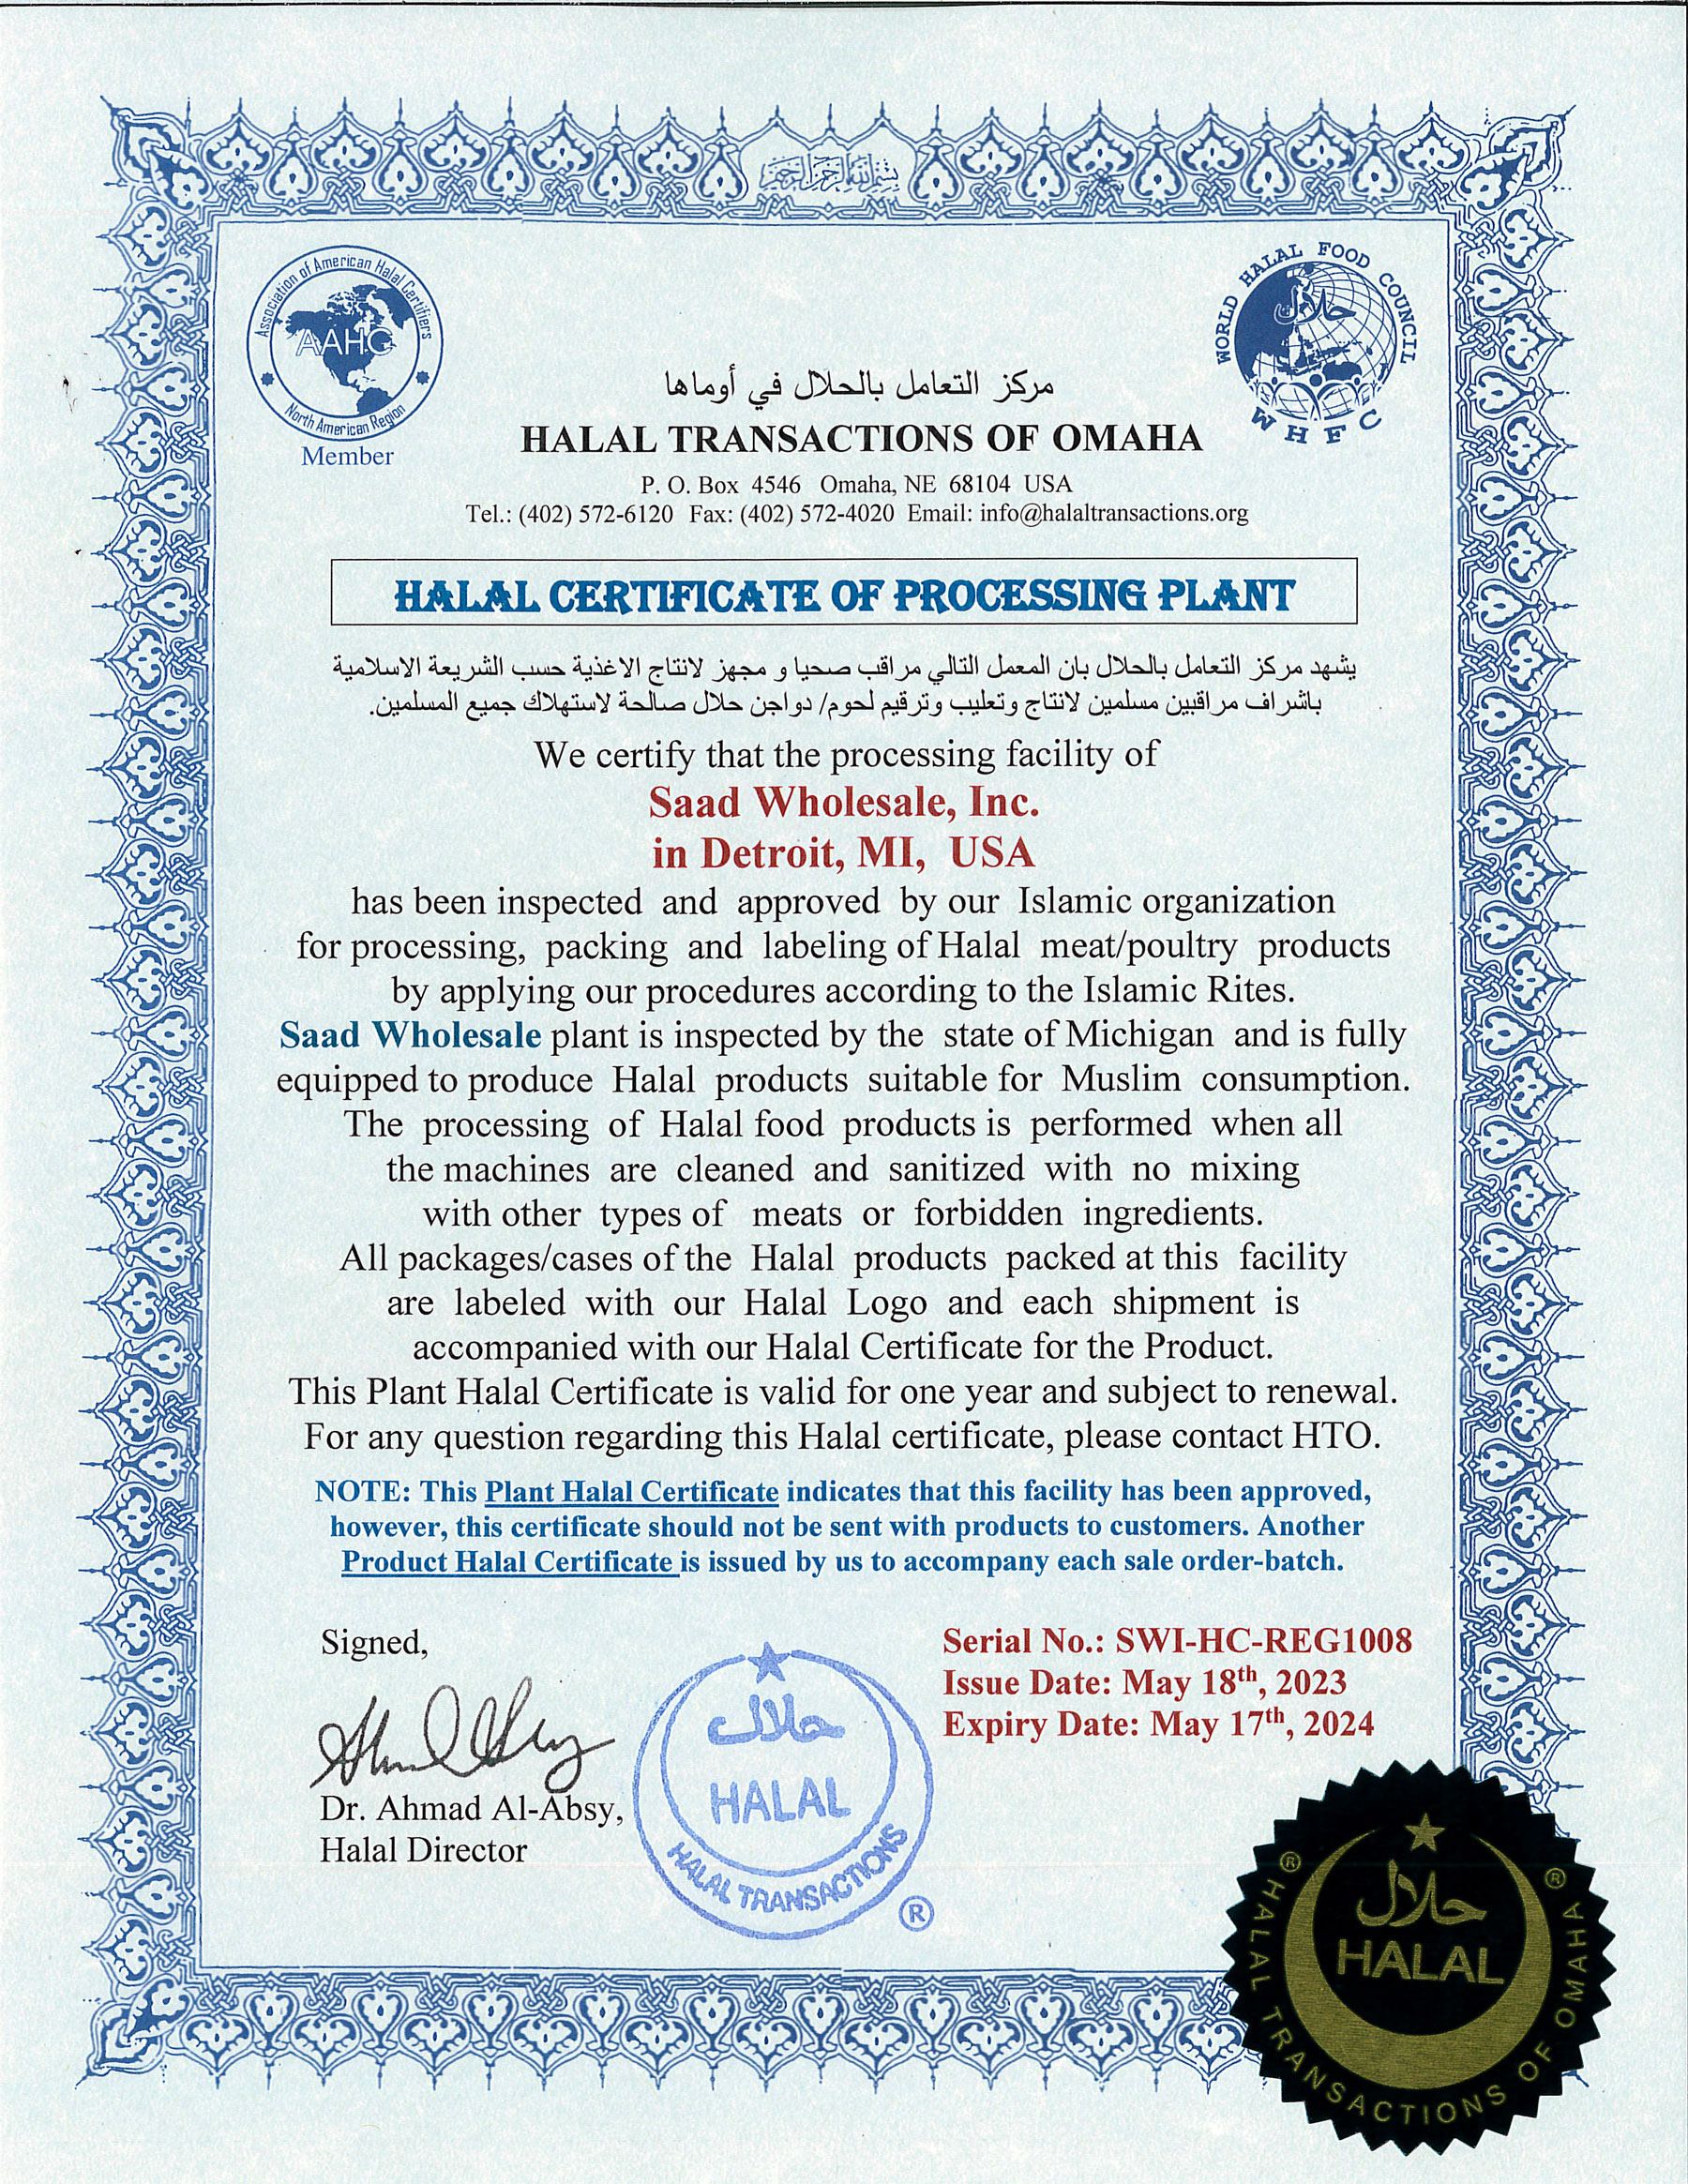 Certified Halal Meats by Saad Wholesale Meats